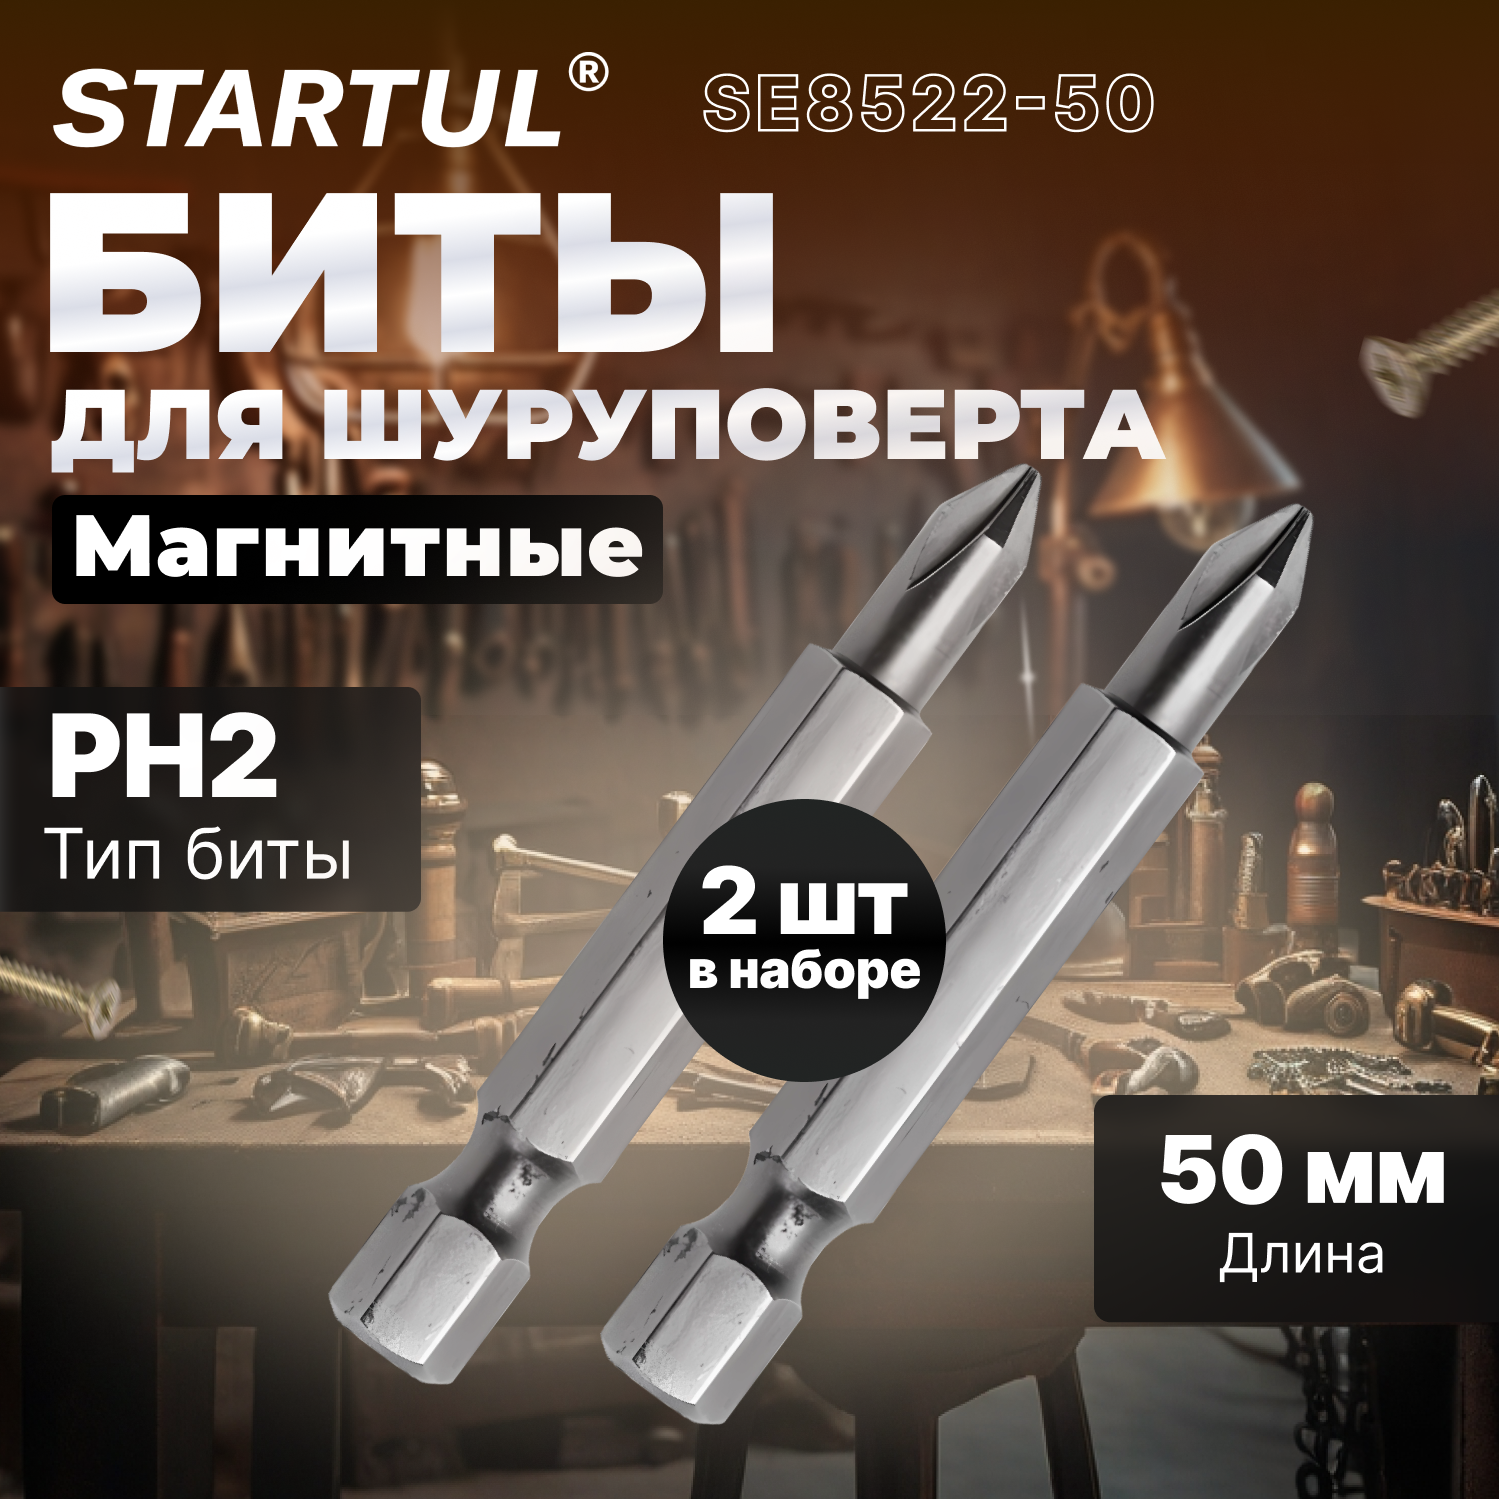 Биты для шуруповерта магнитные PH2 50 мм STARTUL Expert 2 штуки (SE8522-50)